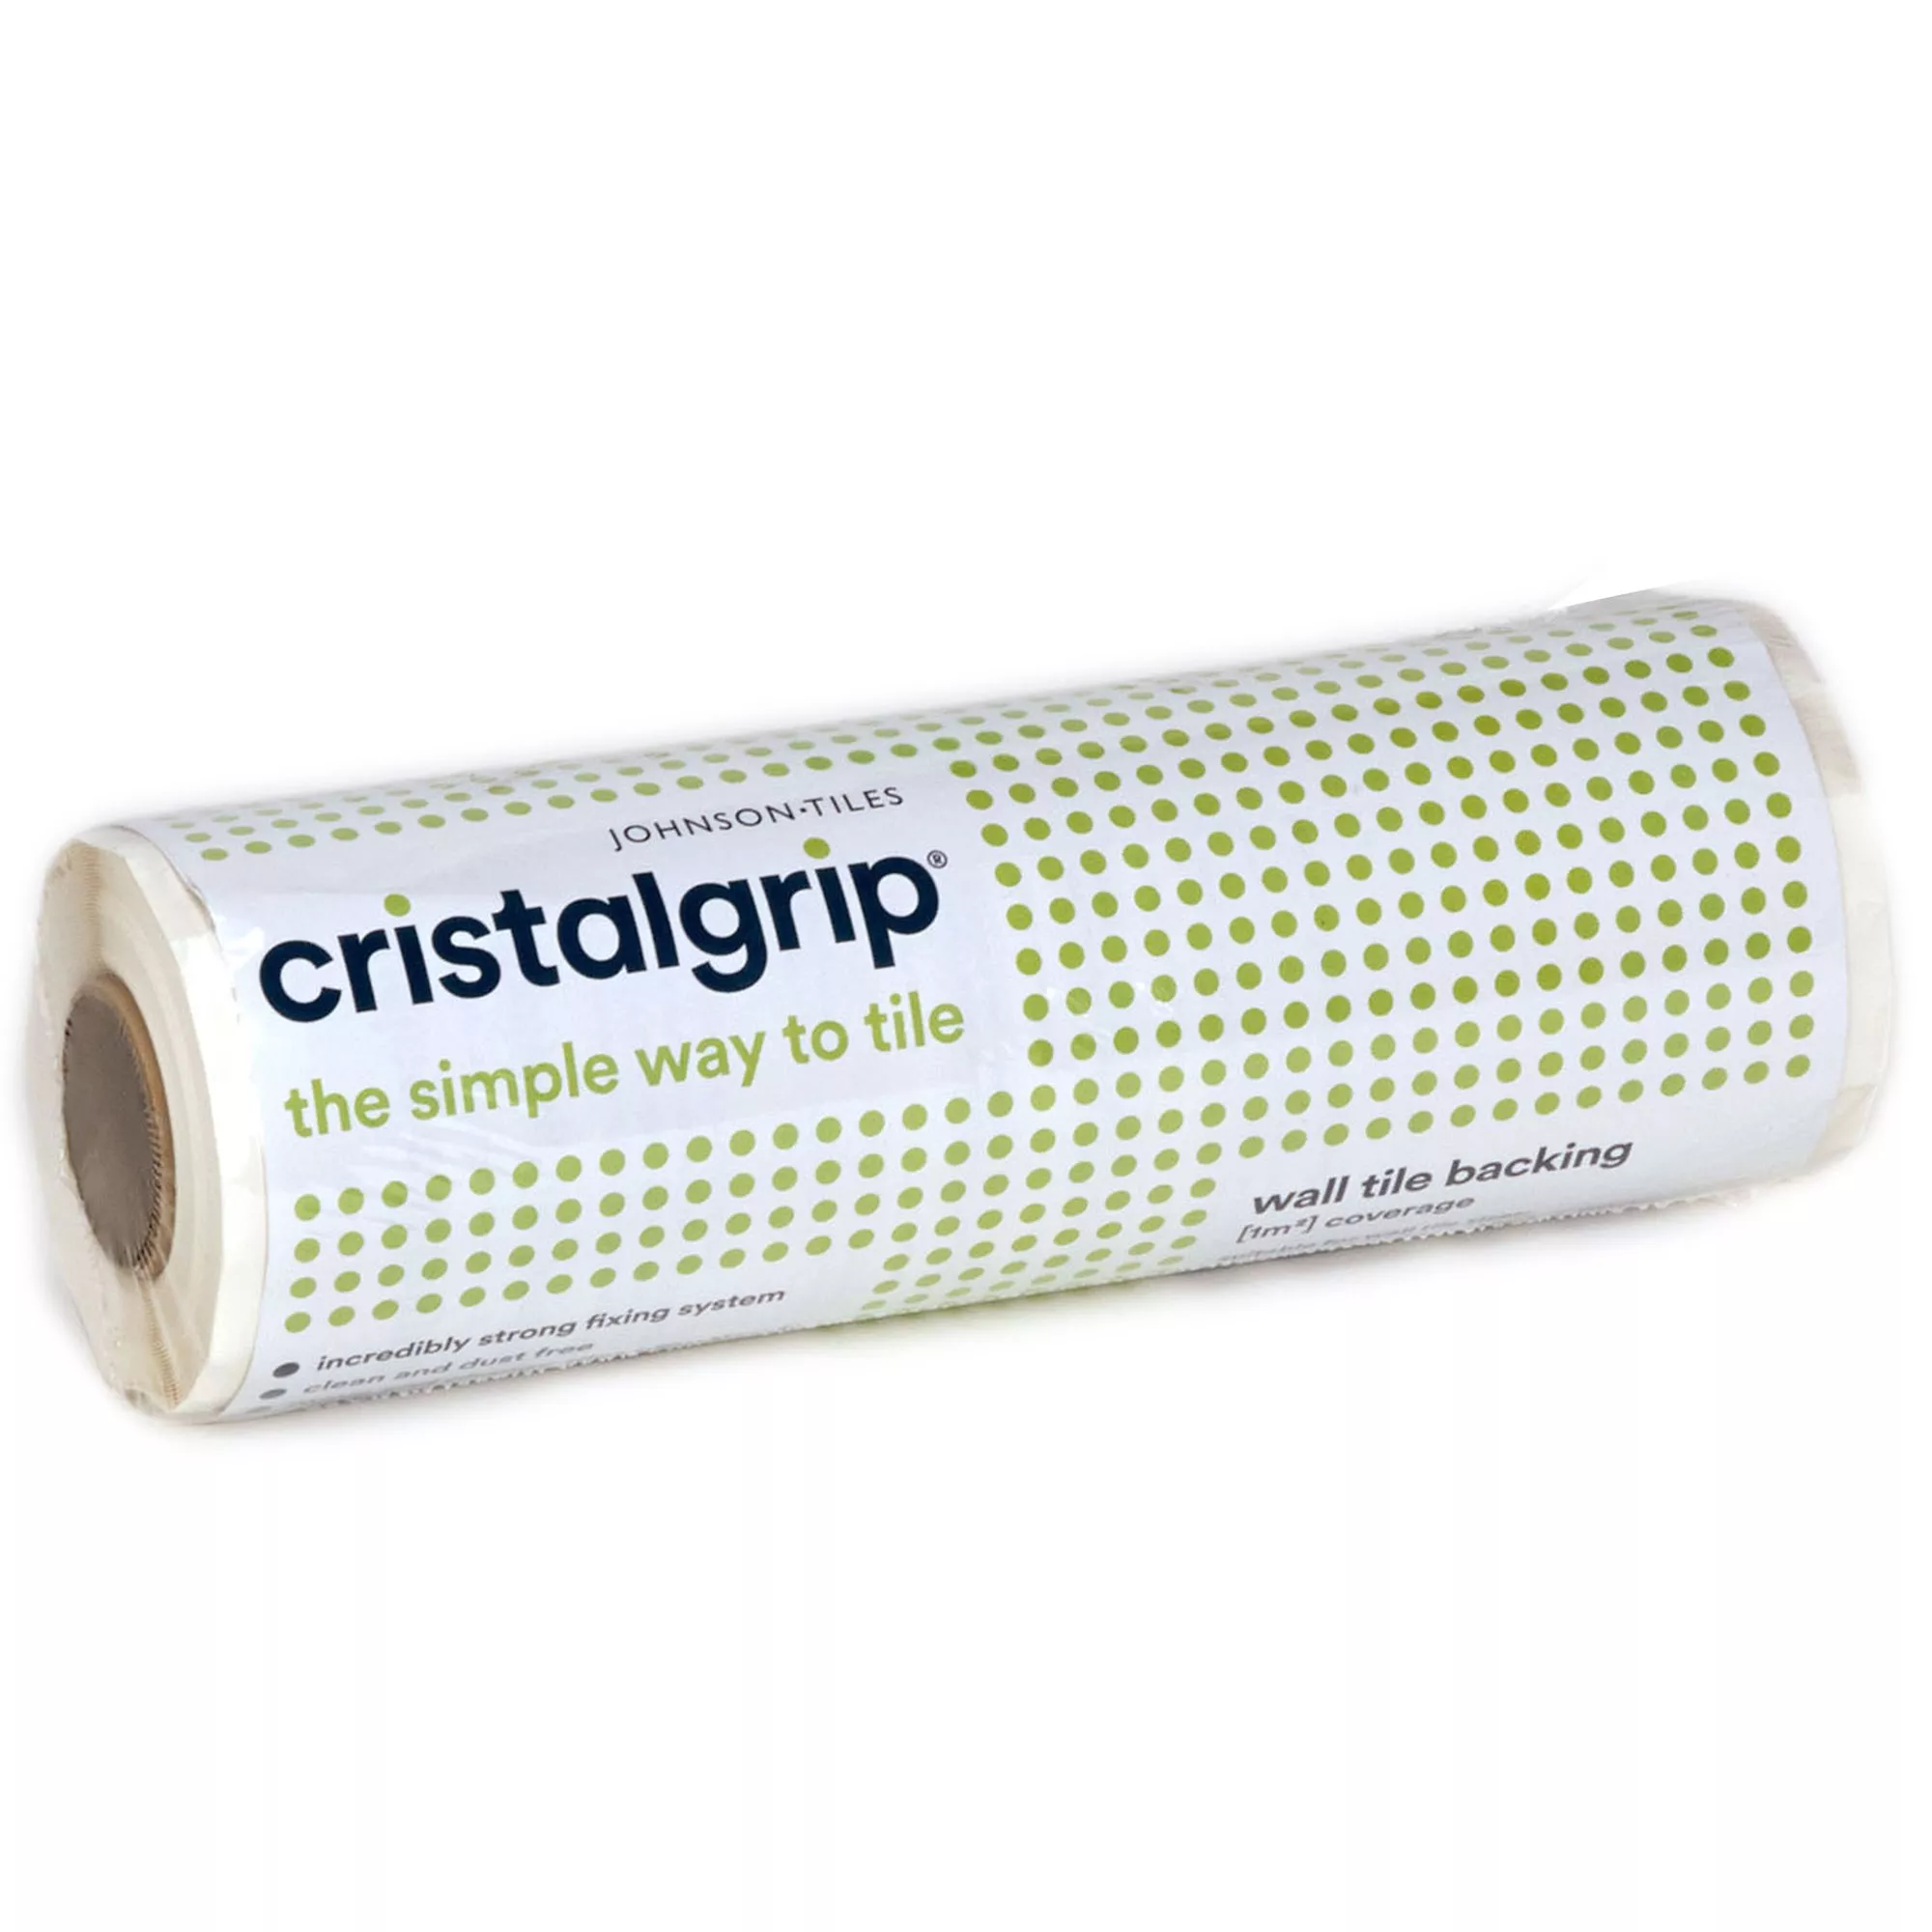 Cristalgrip wall tiles adhesive fabric velcro tape 20cm